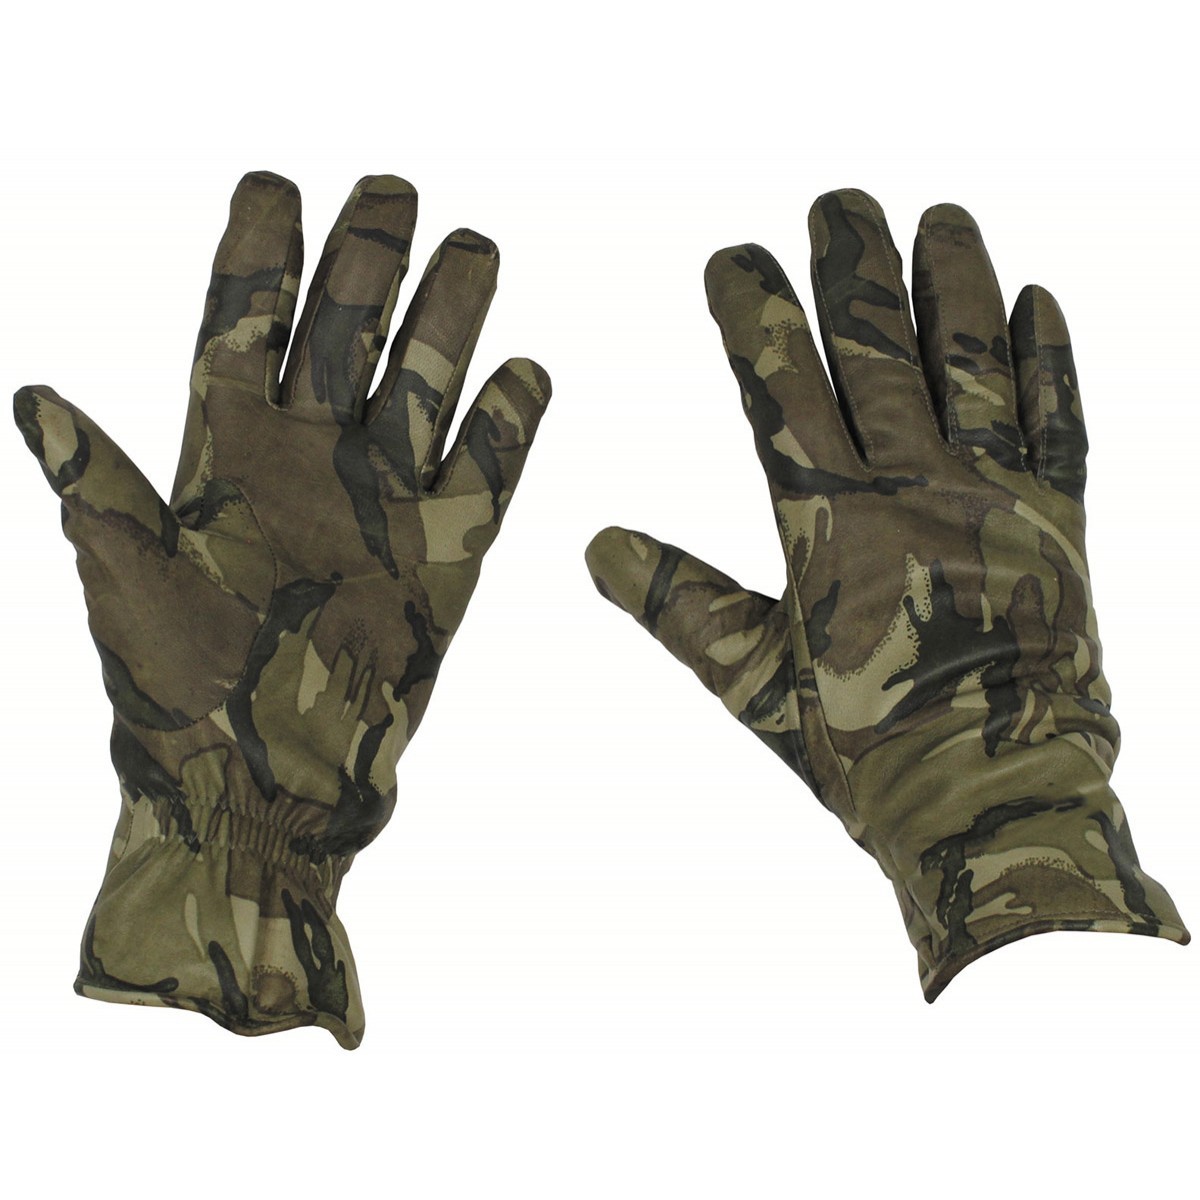 Rukavice kožené zateplené MK II Combat Glove MTP Velká Británie originál Velikost: 9 / M (20-23 cm) použité